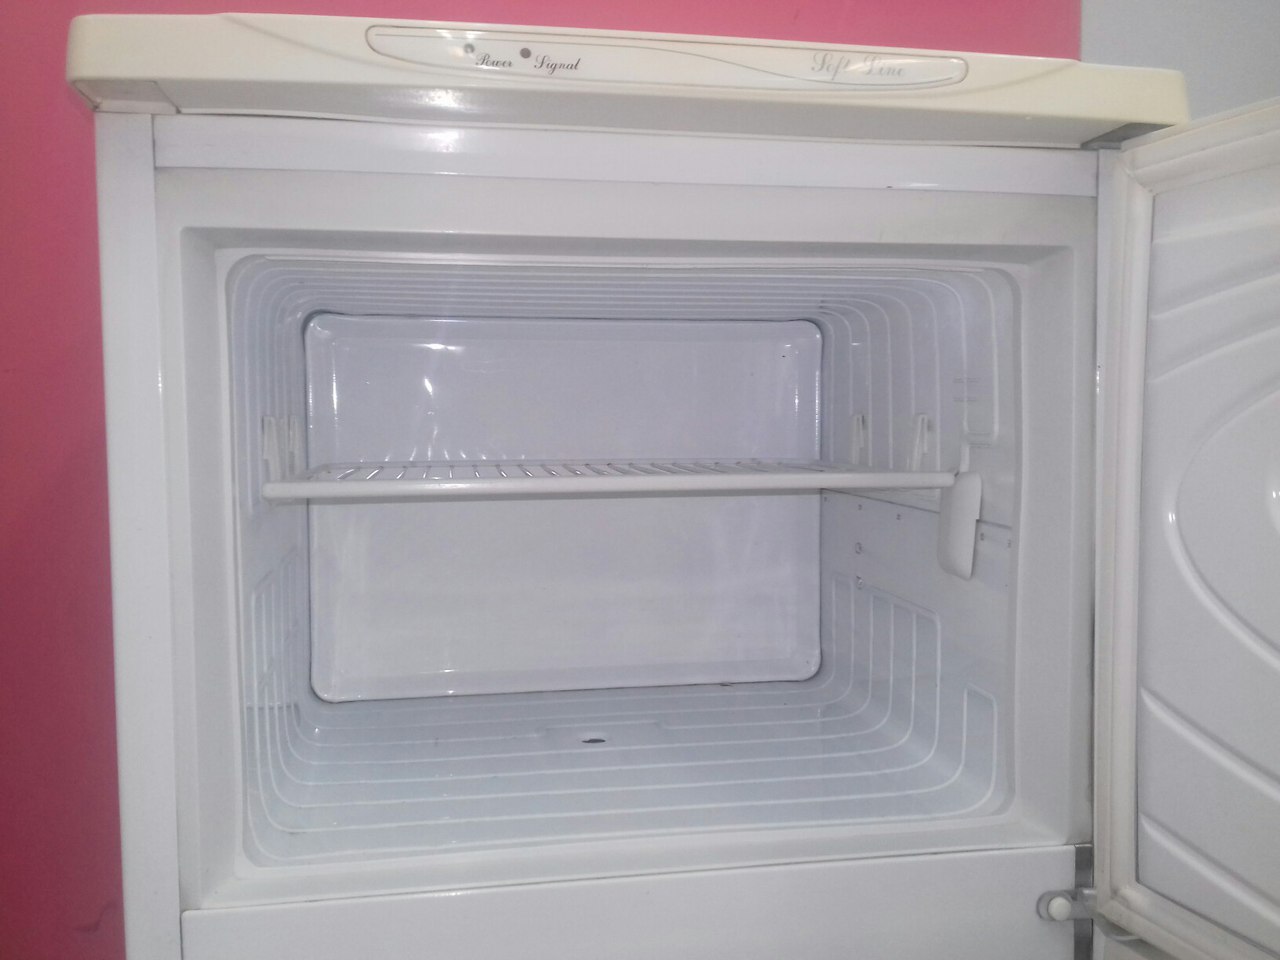 Холодильник Норд Доставка Гарантия в городе Санкт-Петербург, фото 5, телефон продавца: +7 (911) 929-07-87